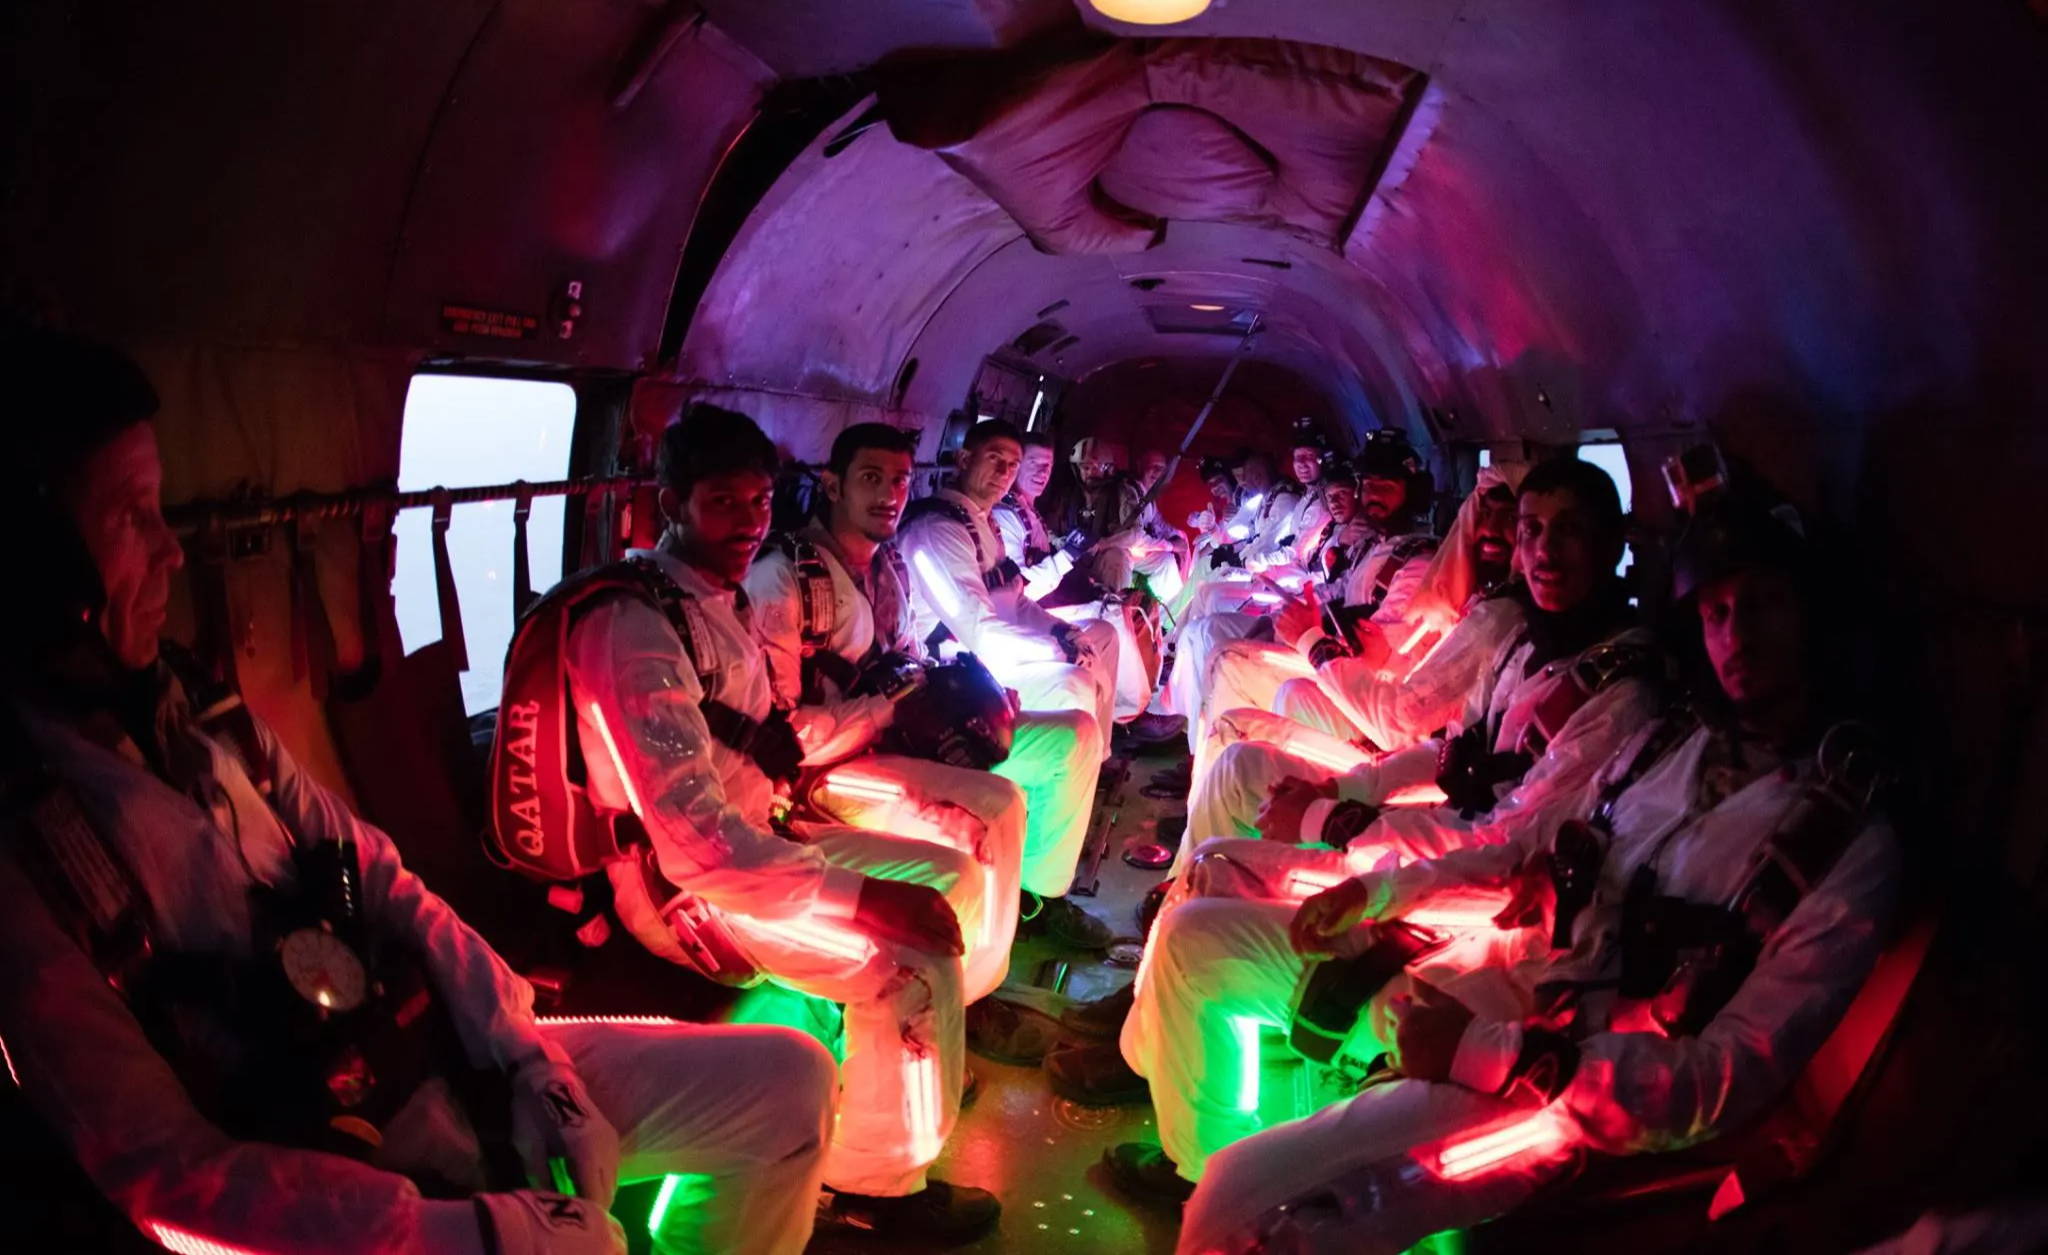 Wingsuit skydive LED lighting using LED strip lights bright colors